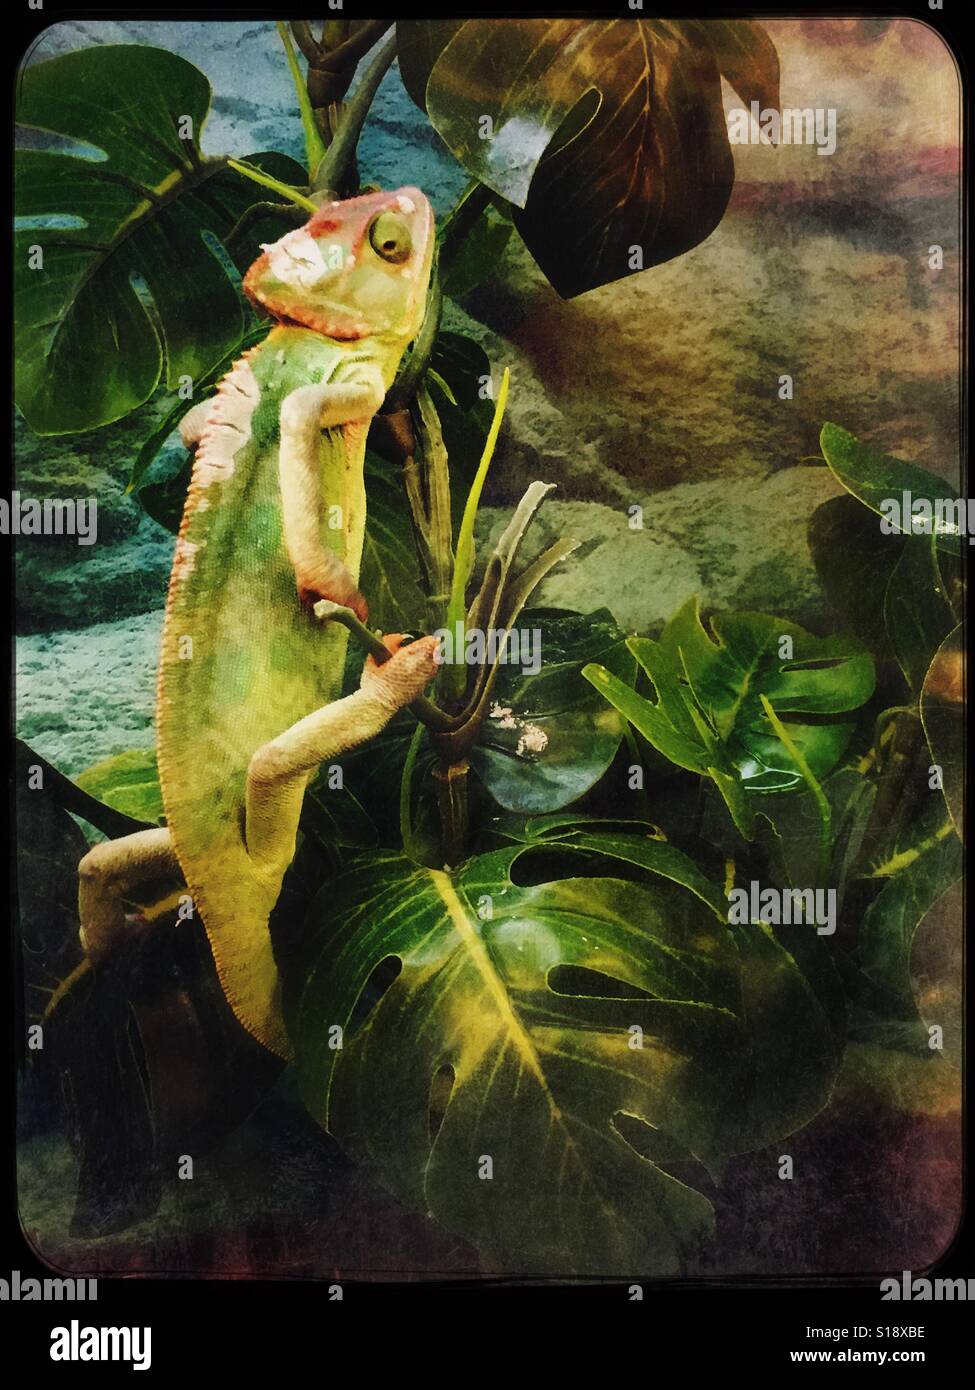 Chameleon climbing up leaves Stock Photo